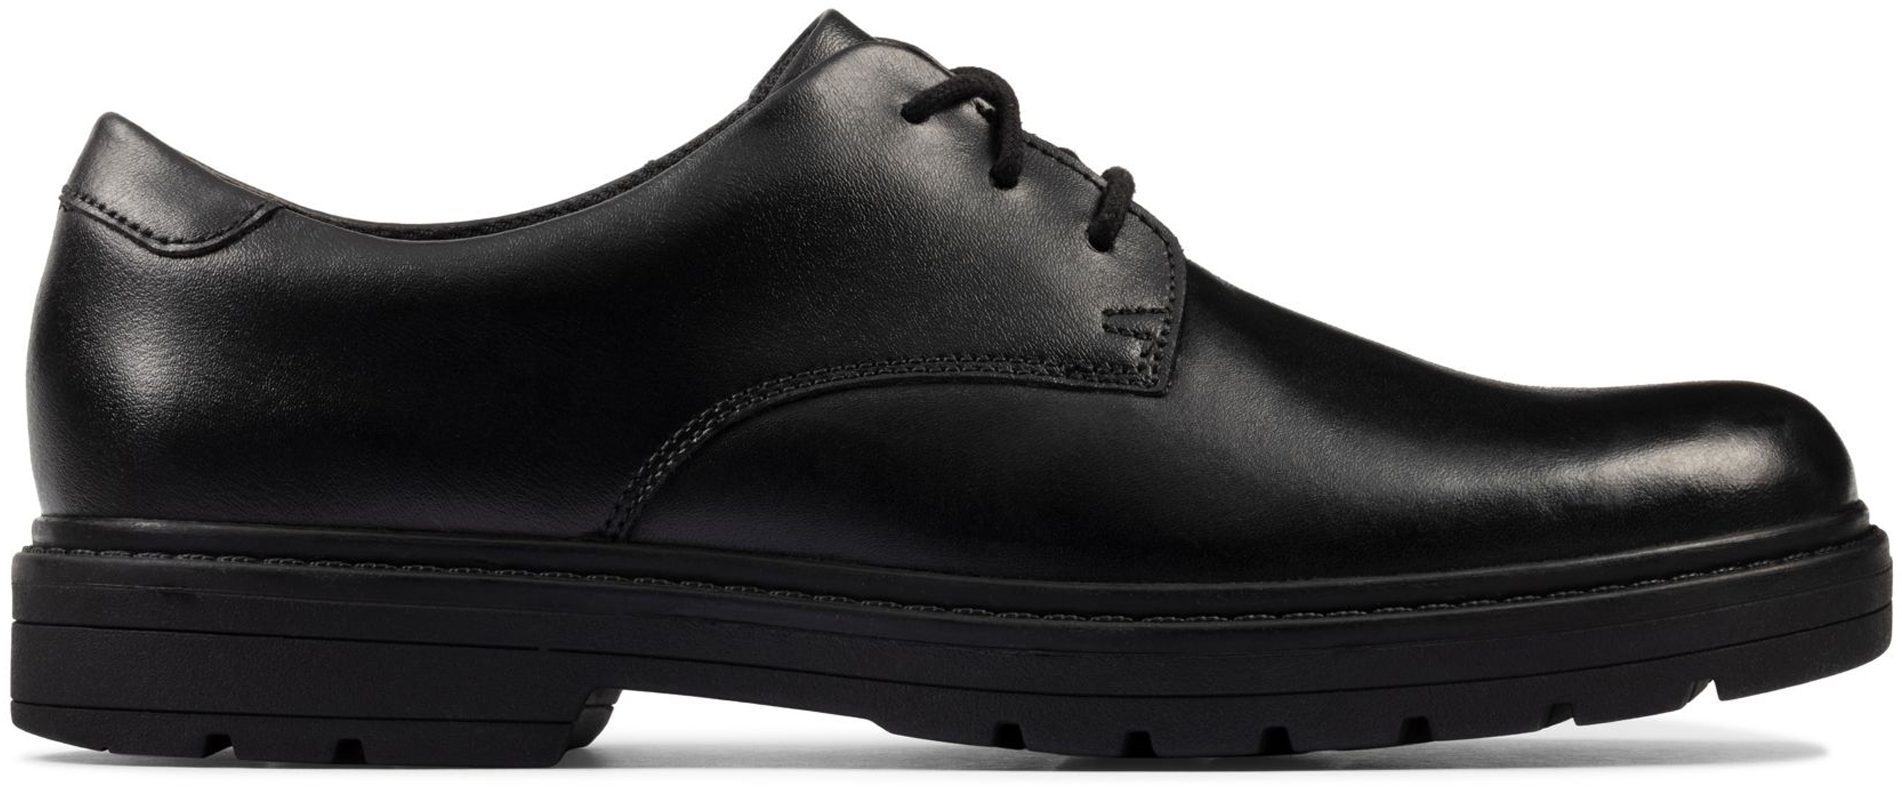 Clarks Loxham Derby Youth Black Leather 26151593 - Boys School Shoes ...